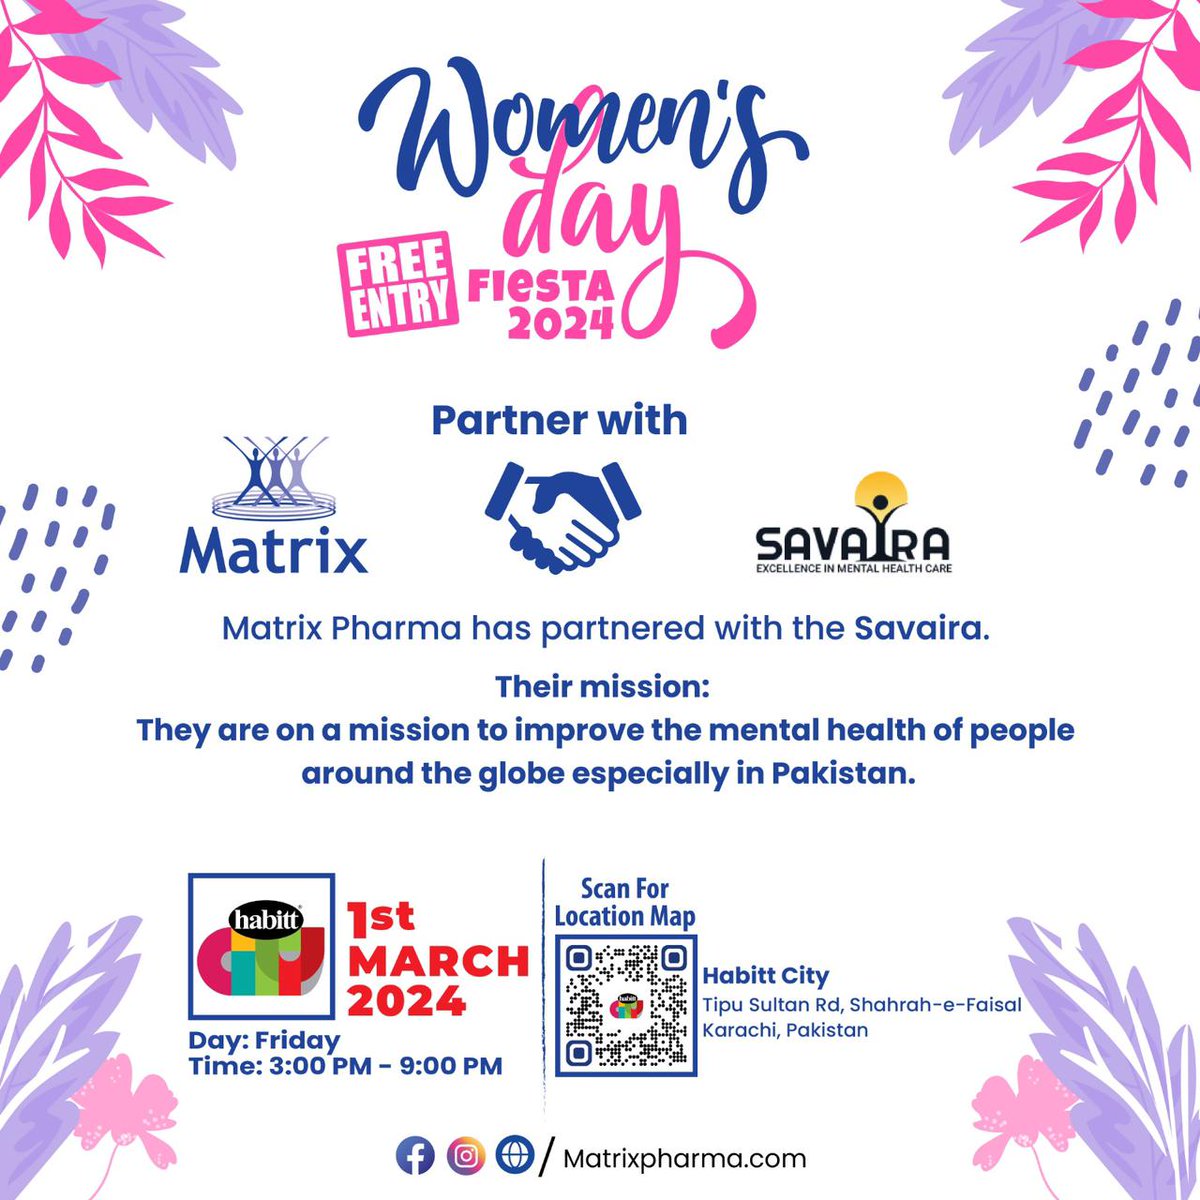 Savaira partners with matrix pharma to celebrate women’s day #WomensDay2024 #CelebratingWomen #SheMeansBusiness #EmpoweringWomen #WomenInHealthcare #PakistanWomen #GlobalWomen #TogetherWeRise #BreakingBarriers #HealthForAll #mentalhealthmatters